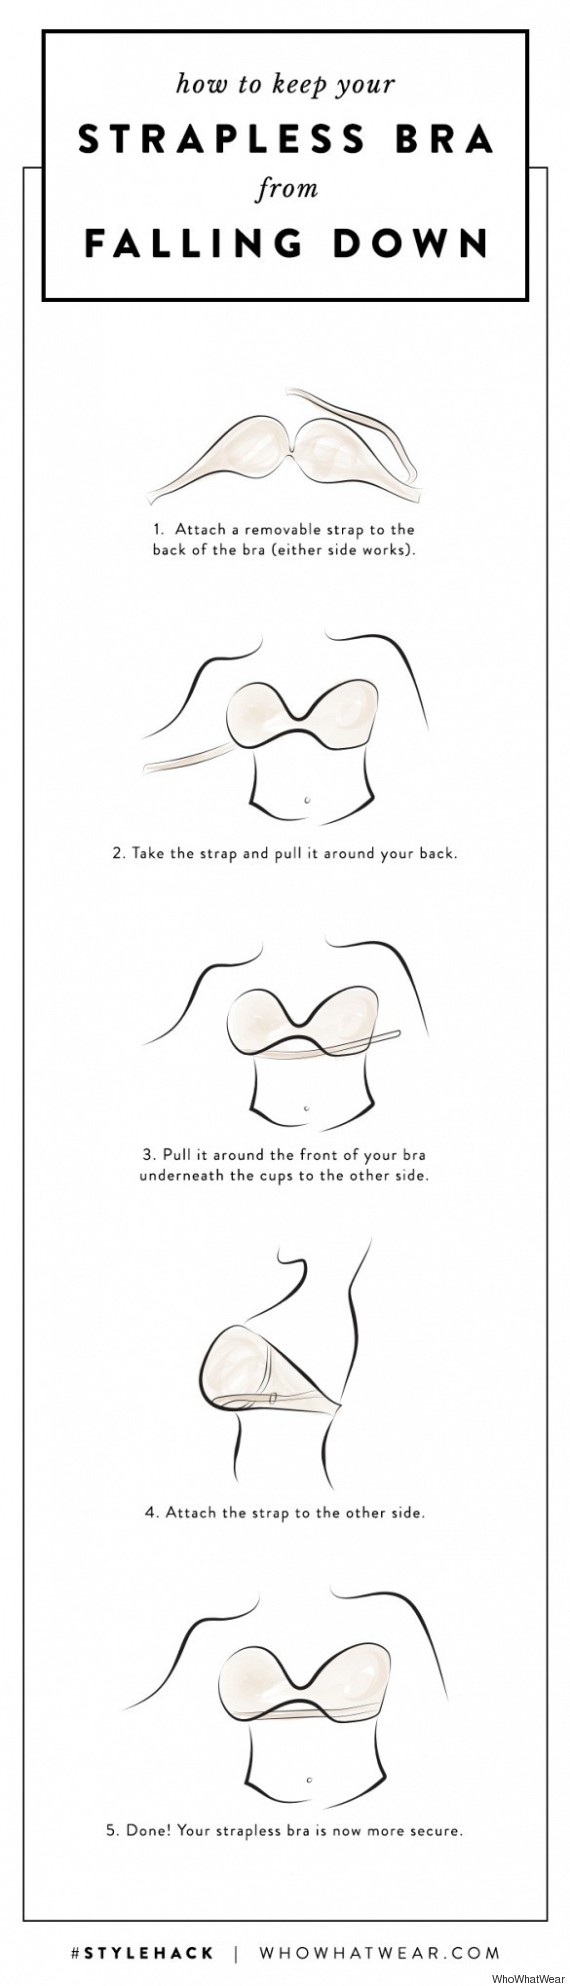 How to Wear a Strapless Bra